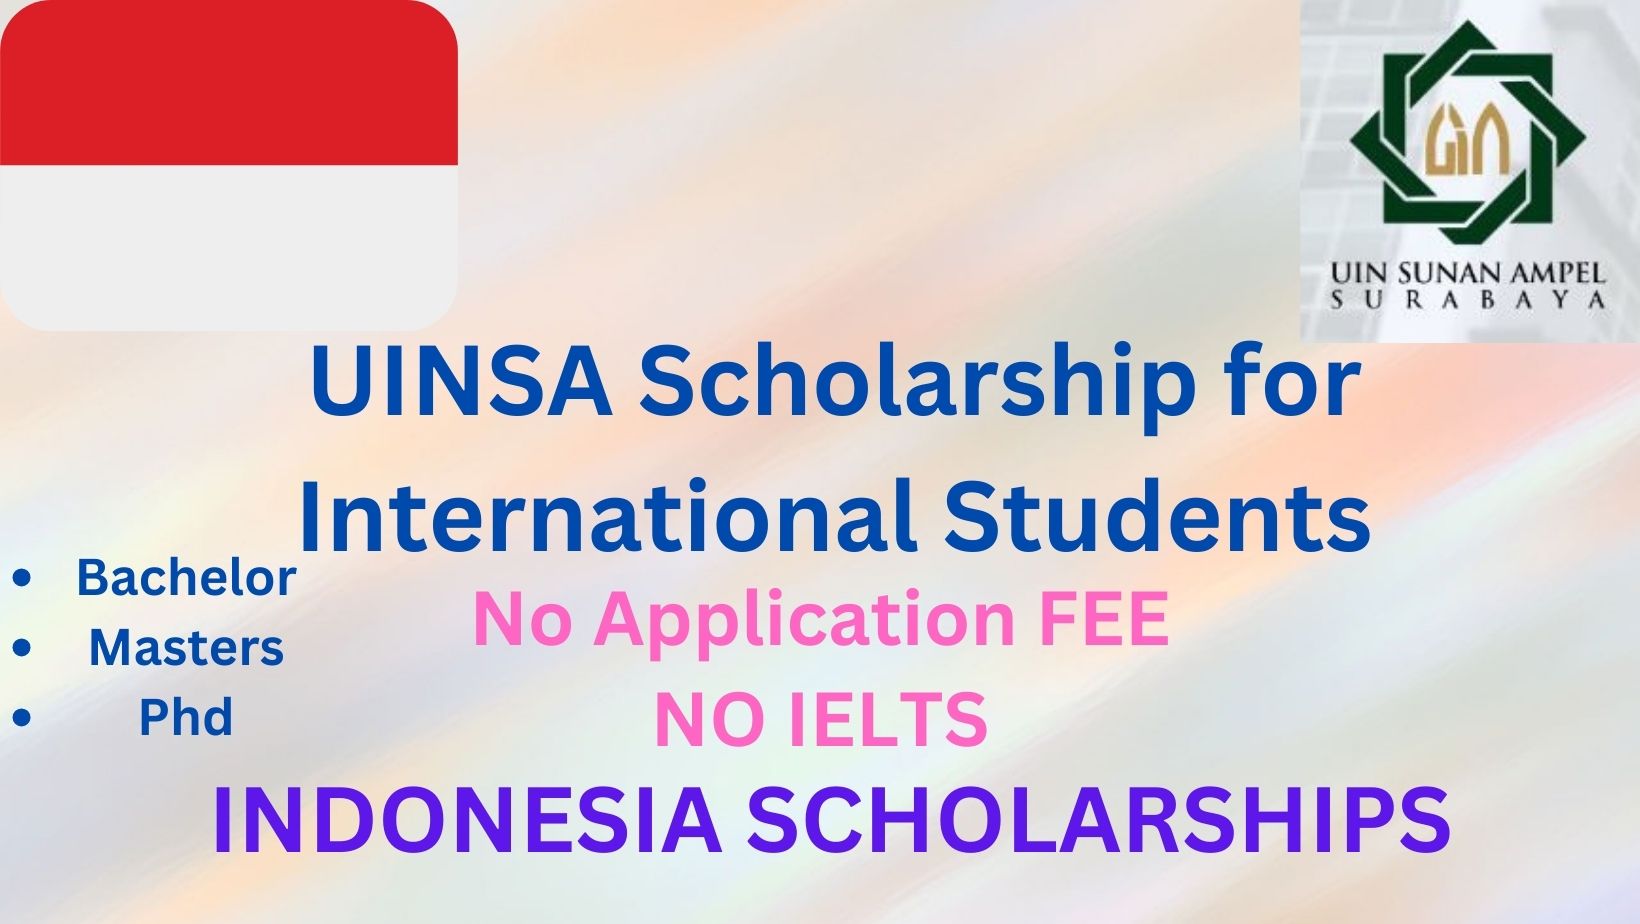 UINSA Scholarship